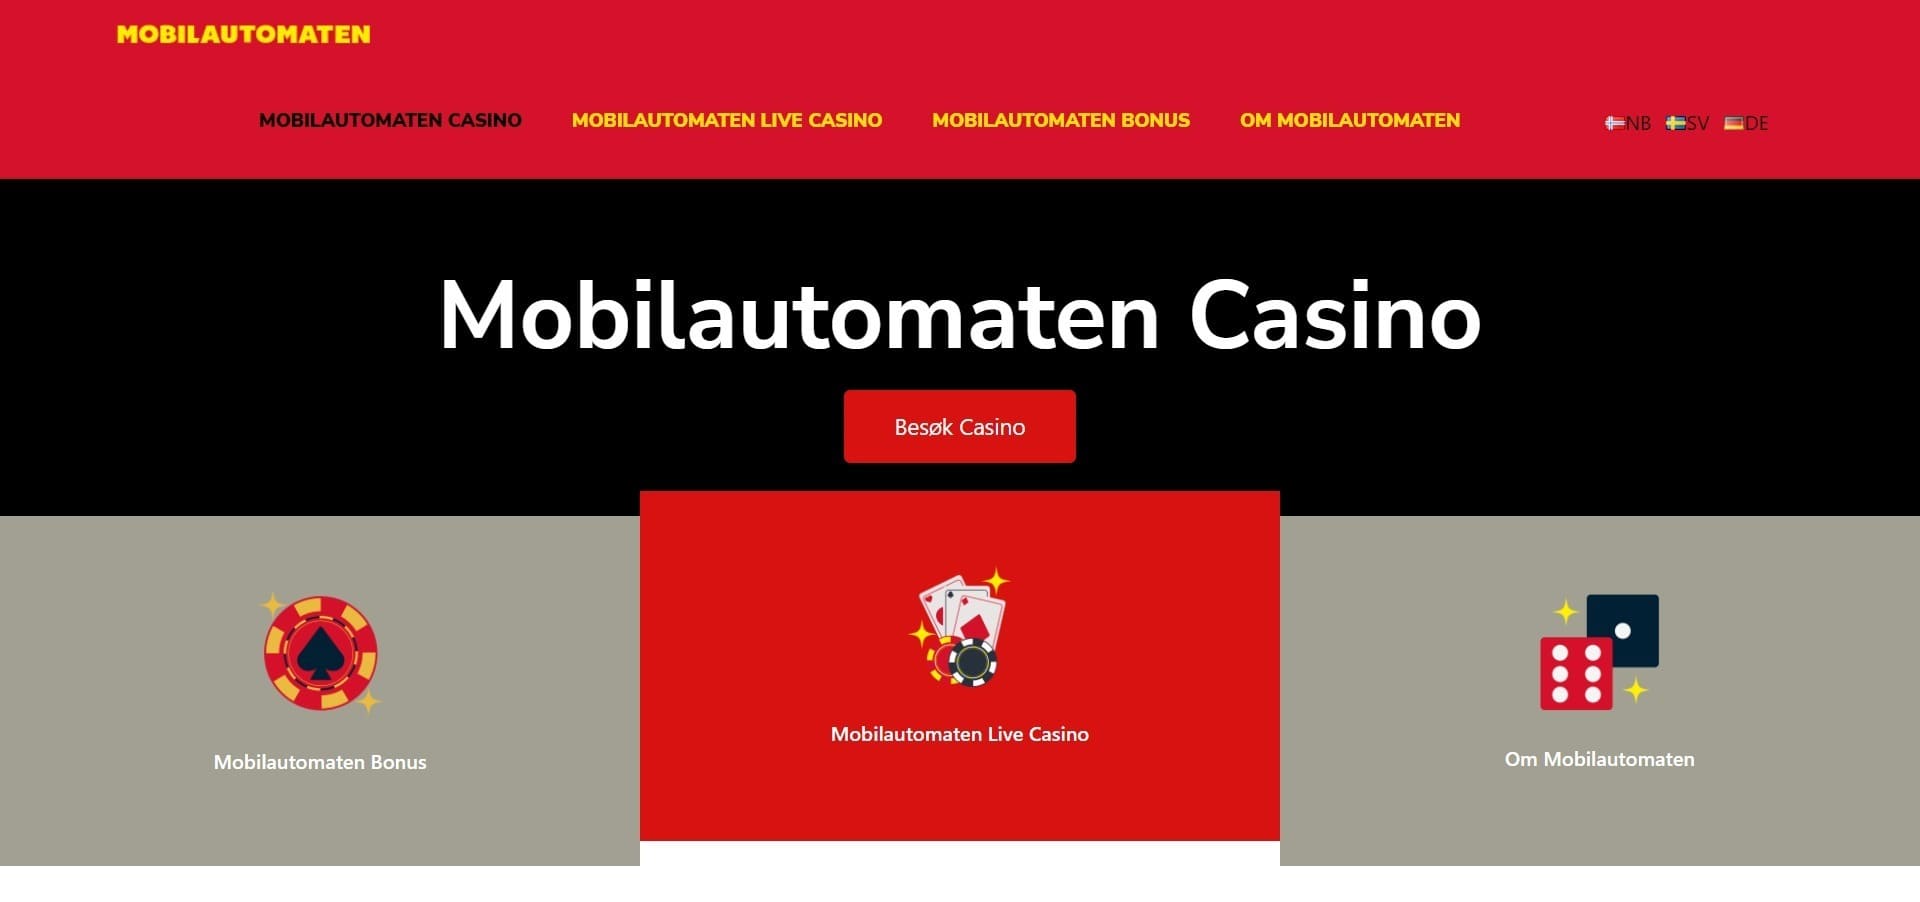 Offizielle Website der Mobilautomaten Casino